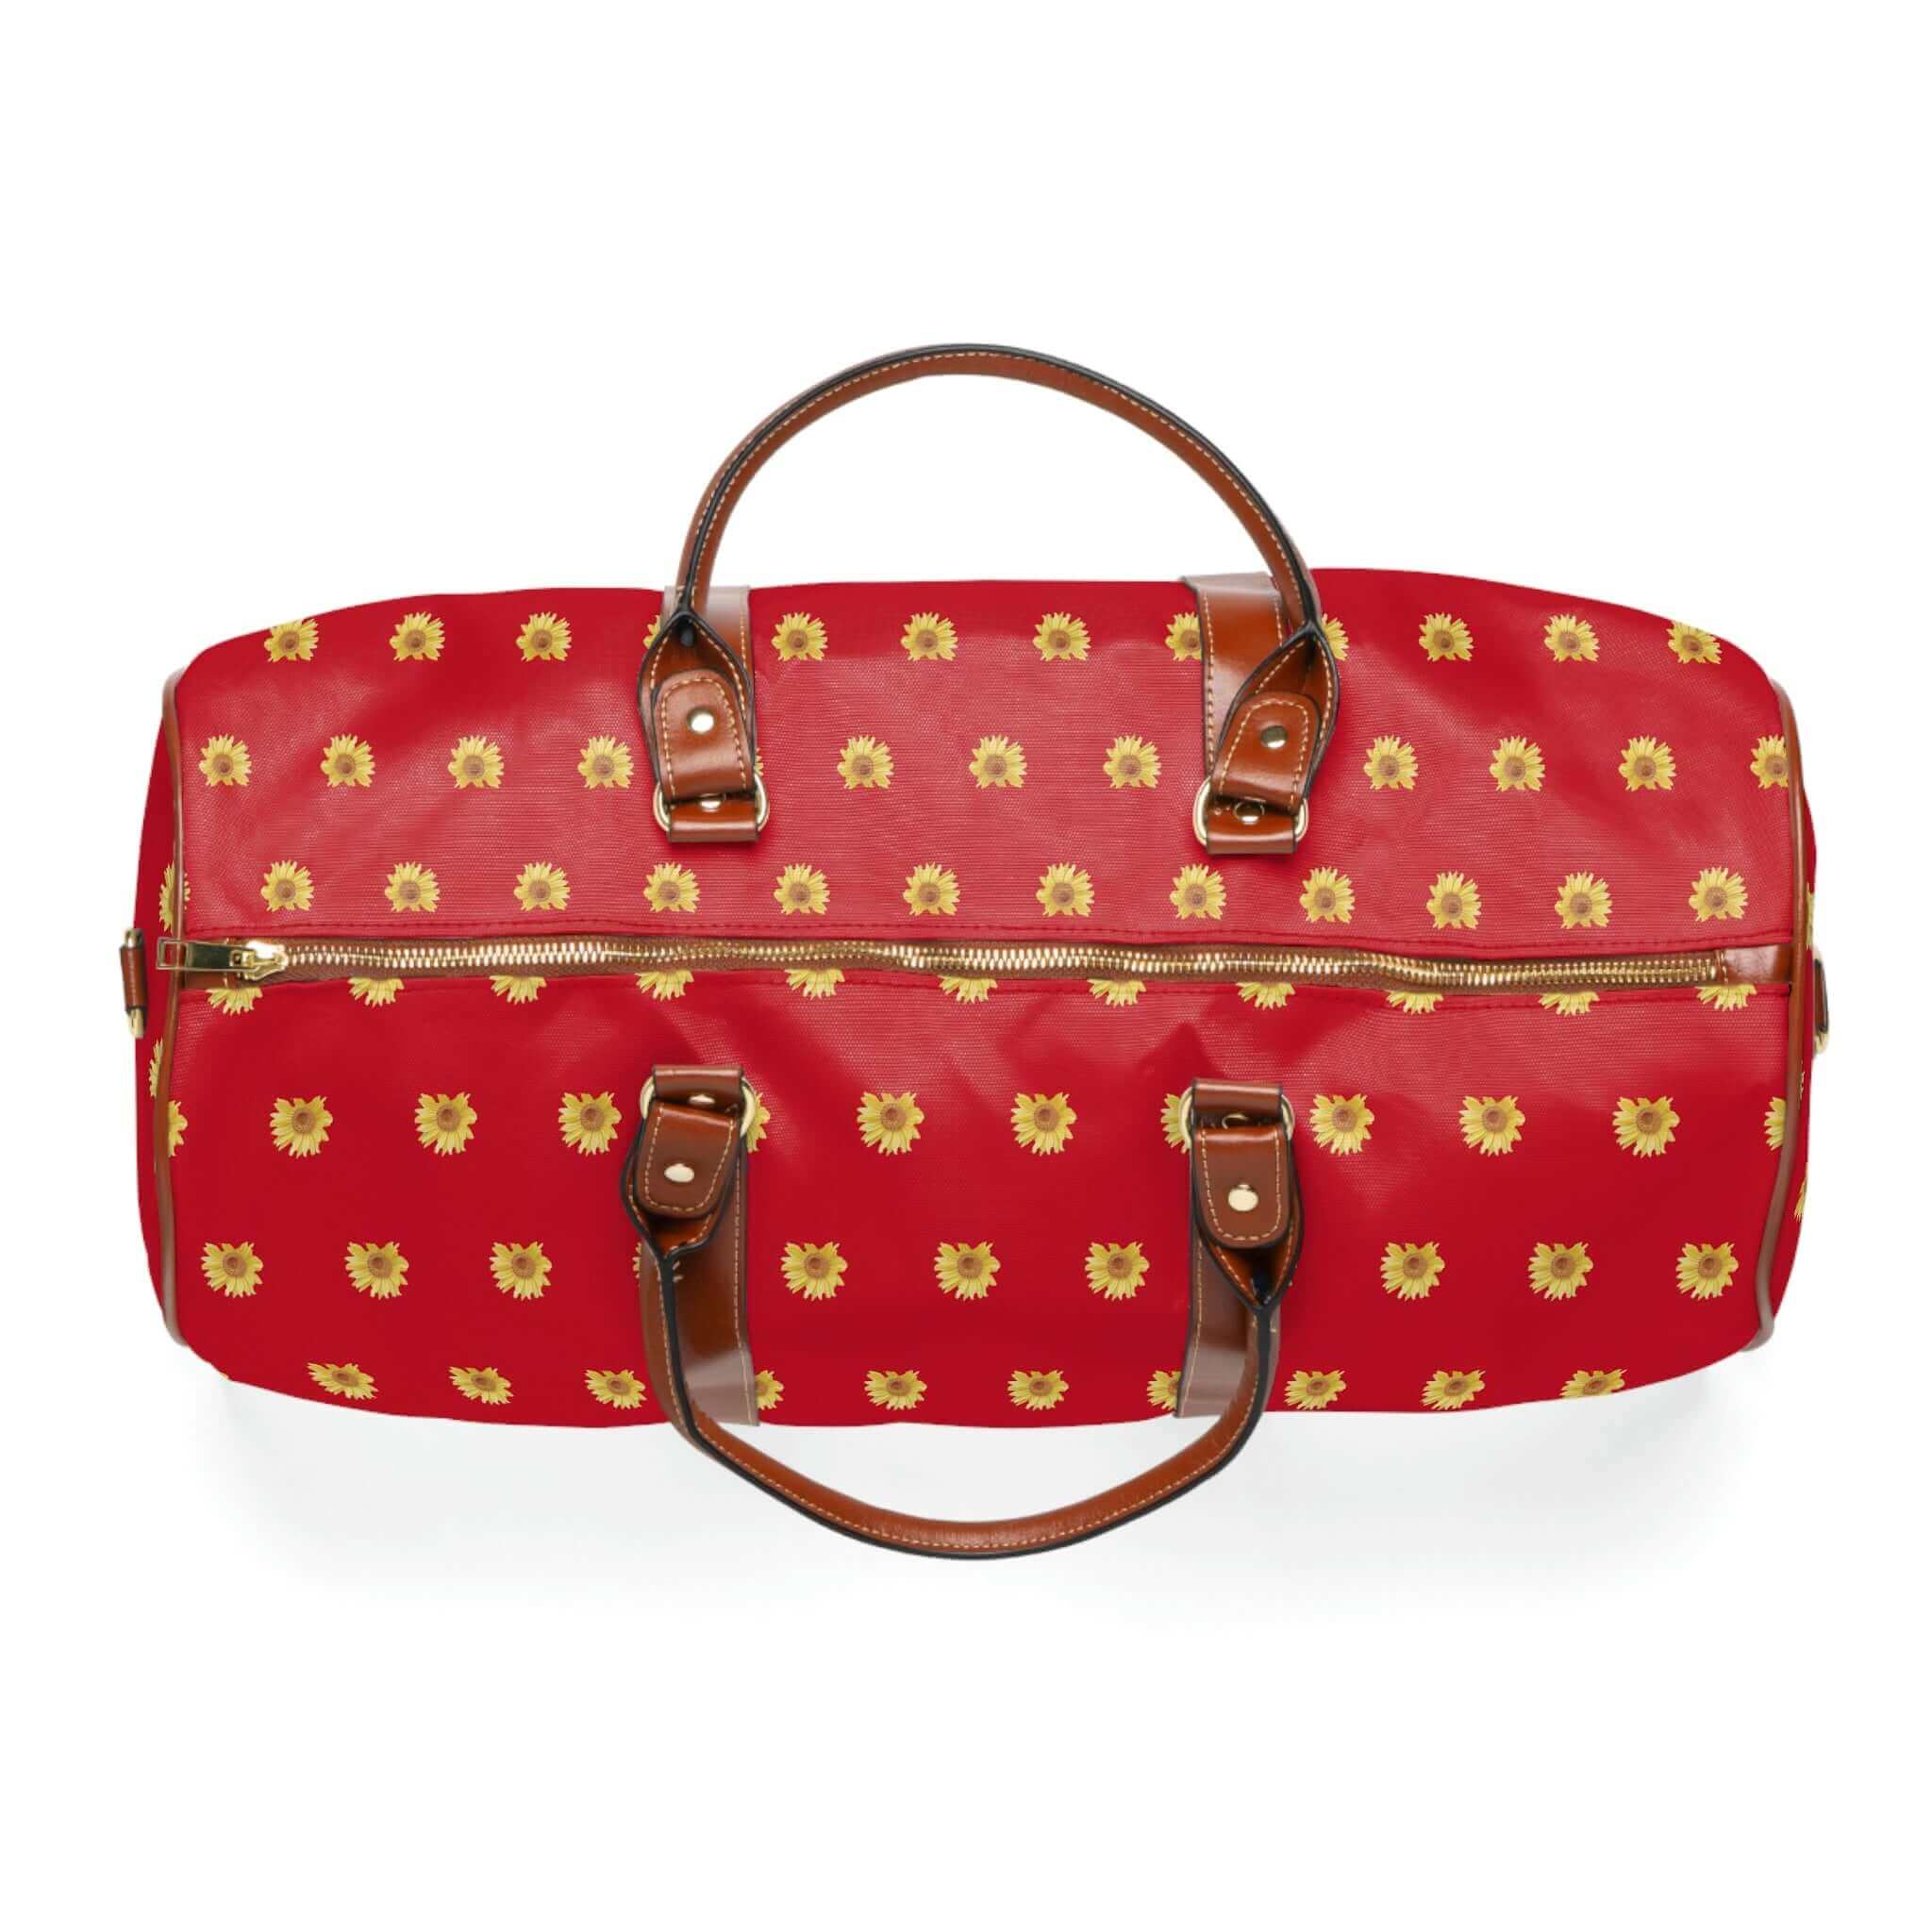 Sunny Design Red Waterproof Travel Bag